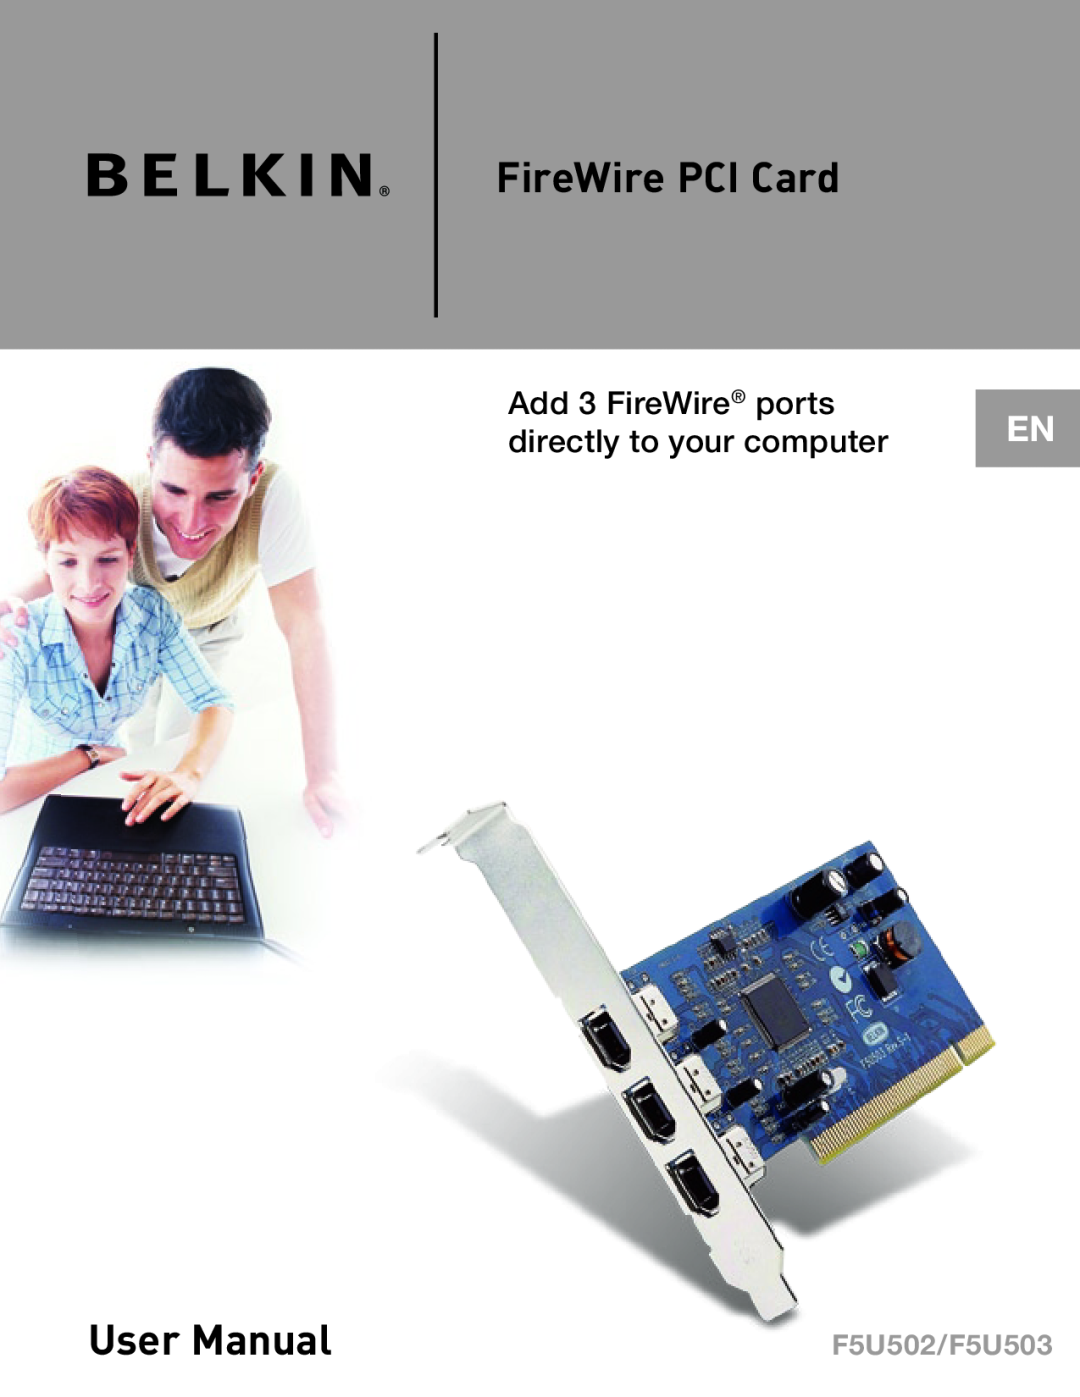 Belkin user manual FireWire PCI Card, User Manual, Add 3 FireWire ports directly to your computer, F5U502/F5U503 